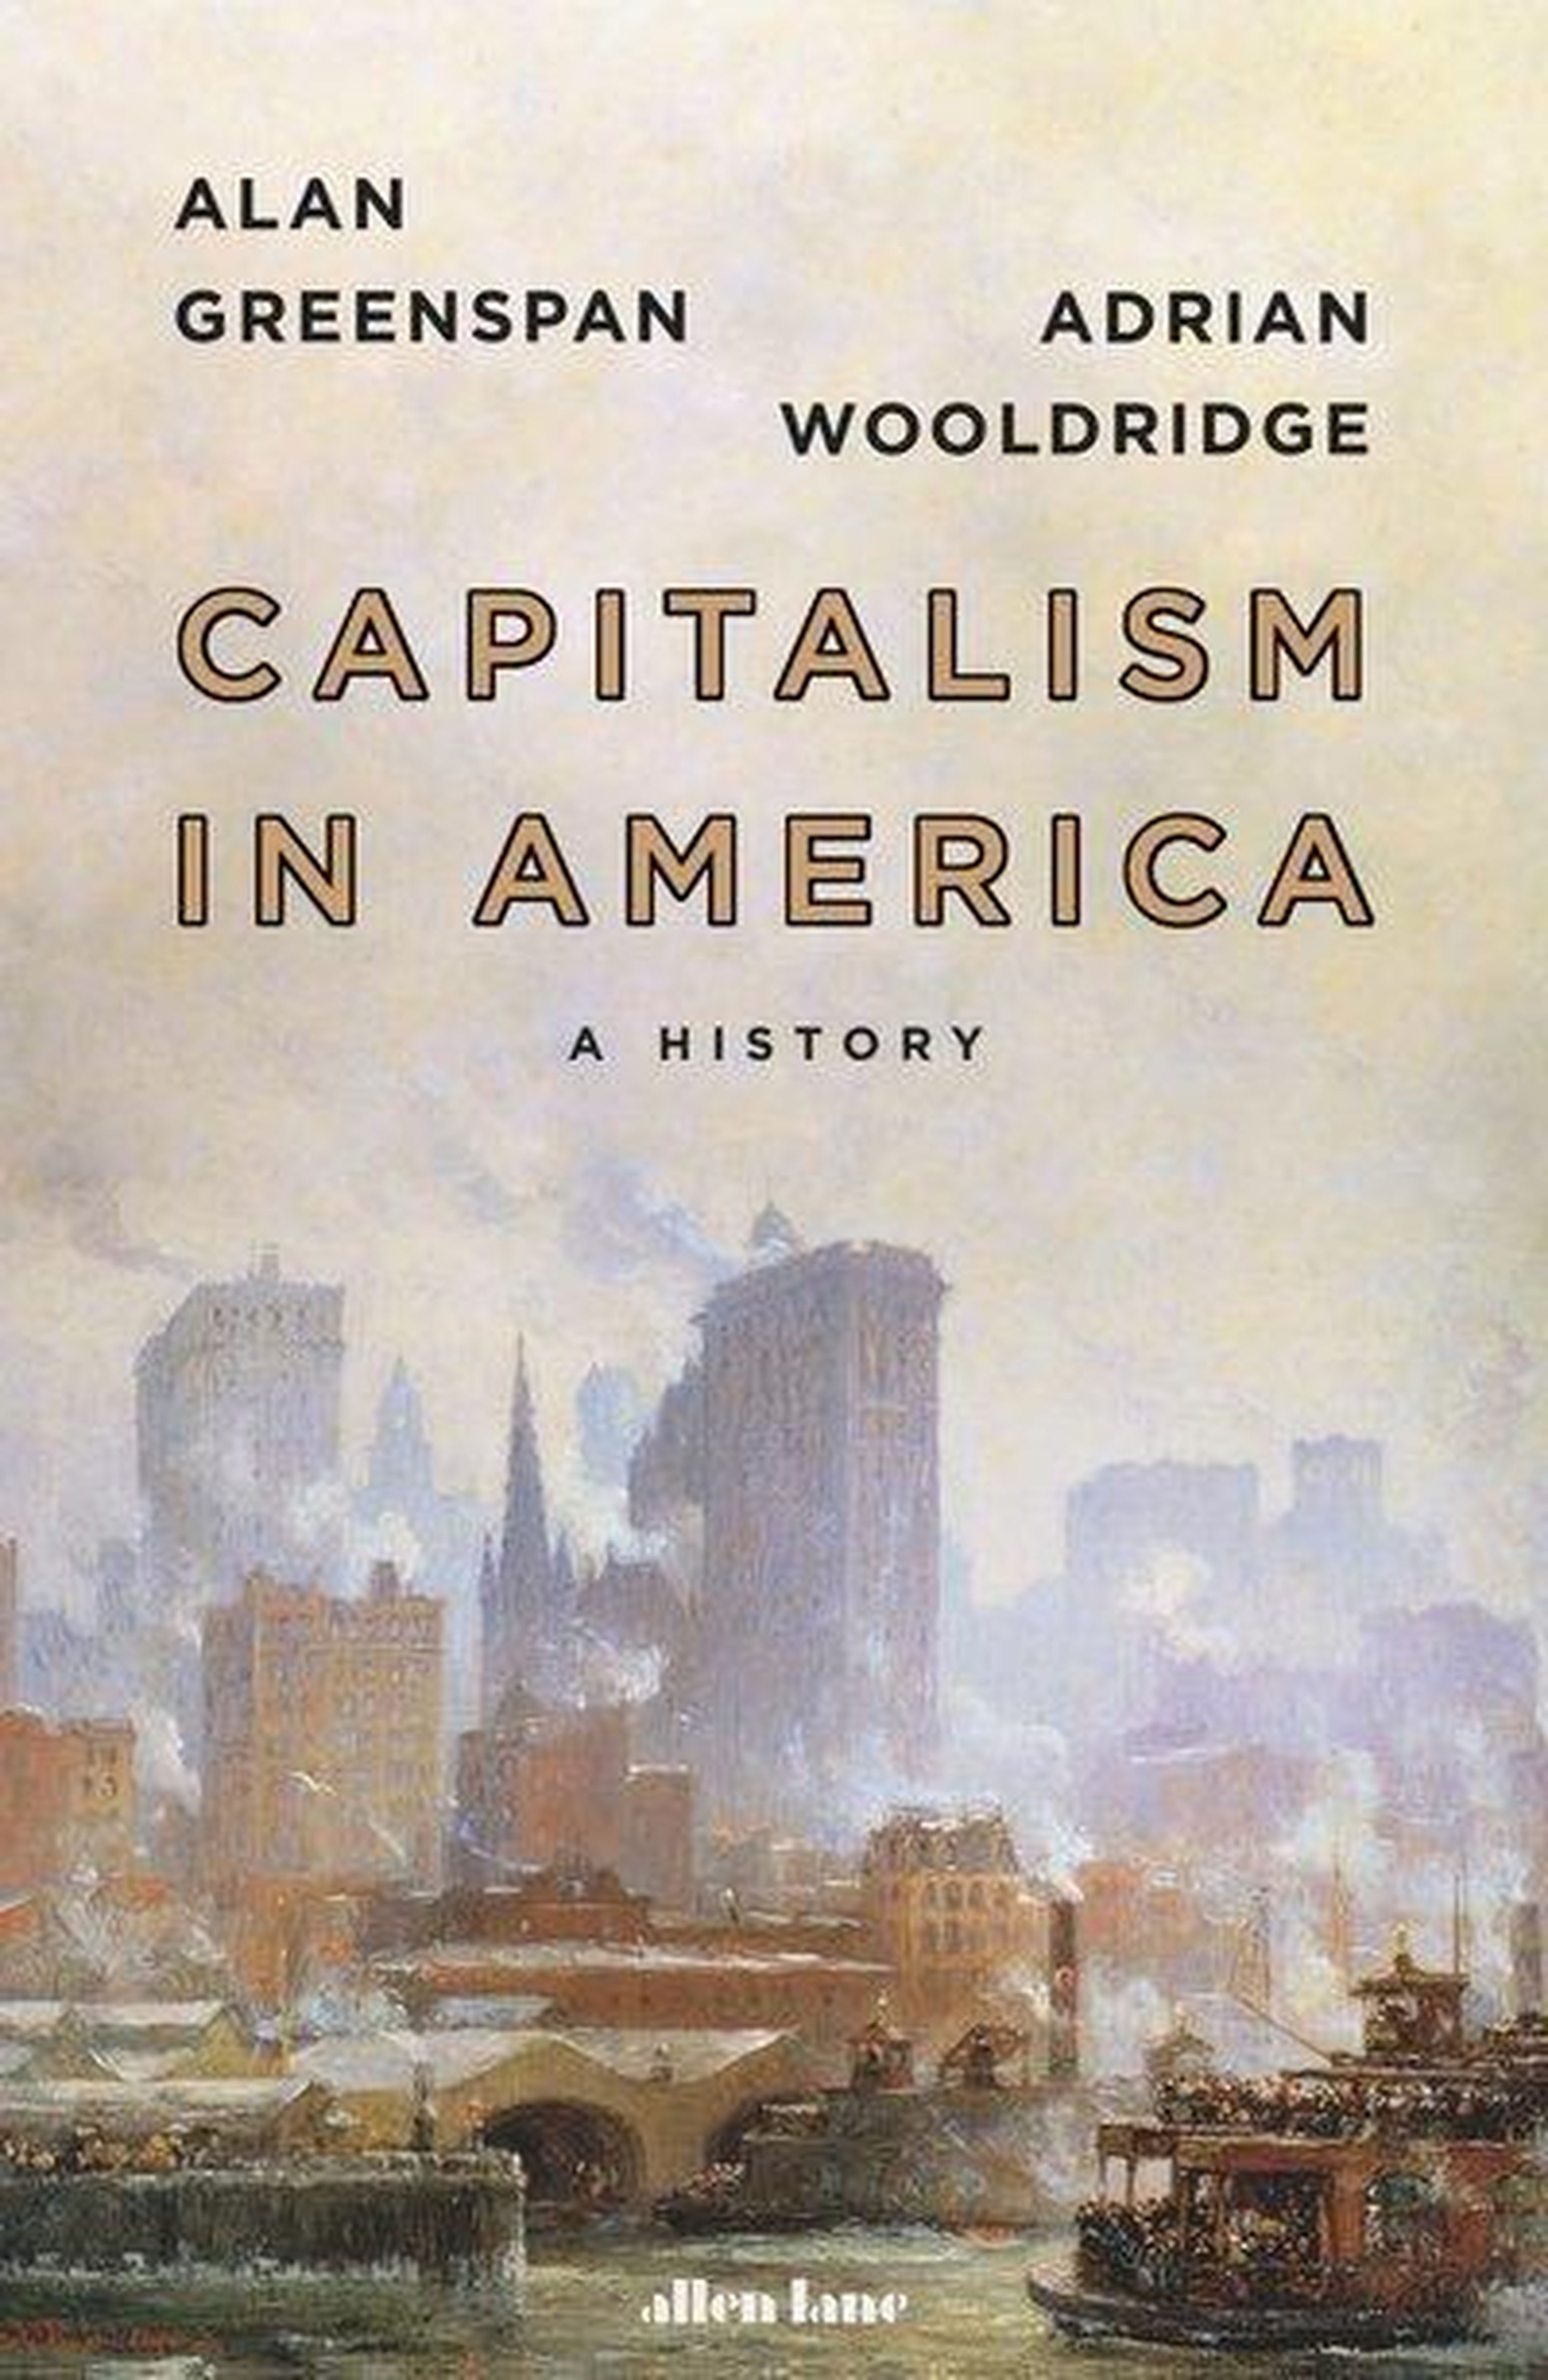 'Capitalism in America' by Alan Greenspan and Adrian Woolridge